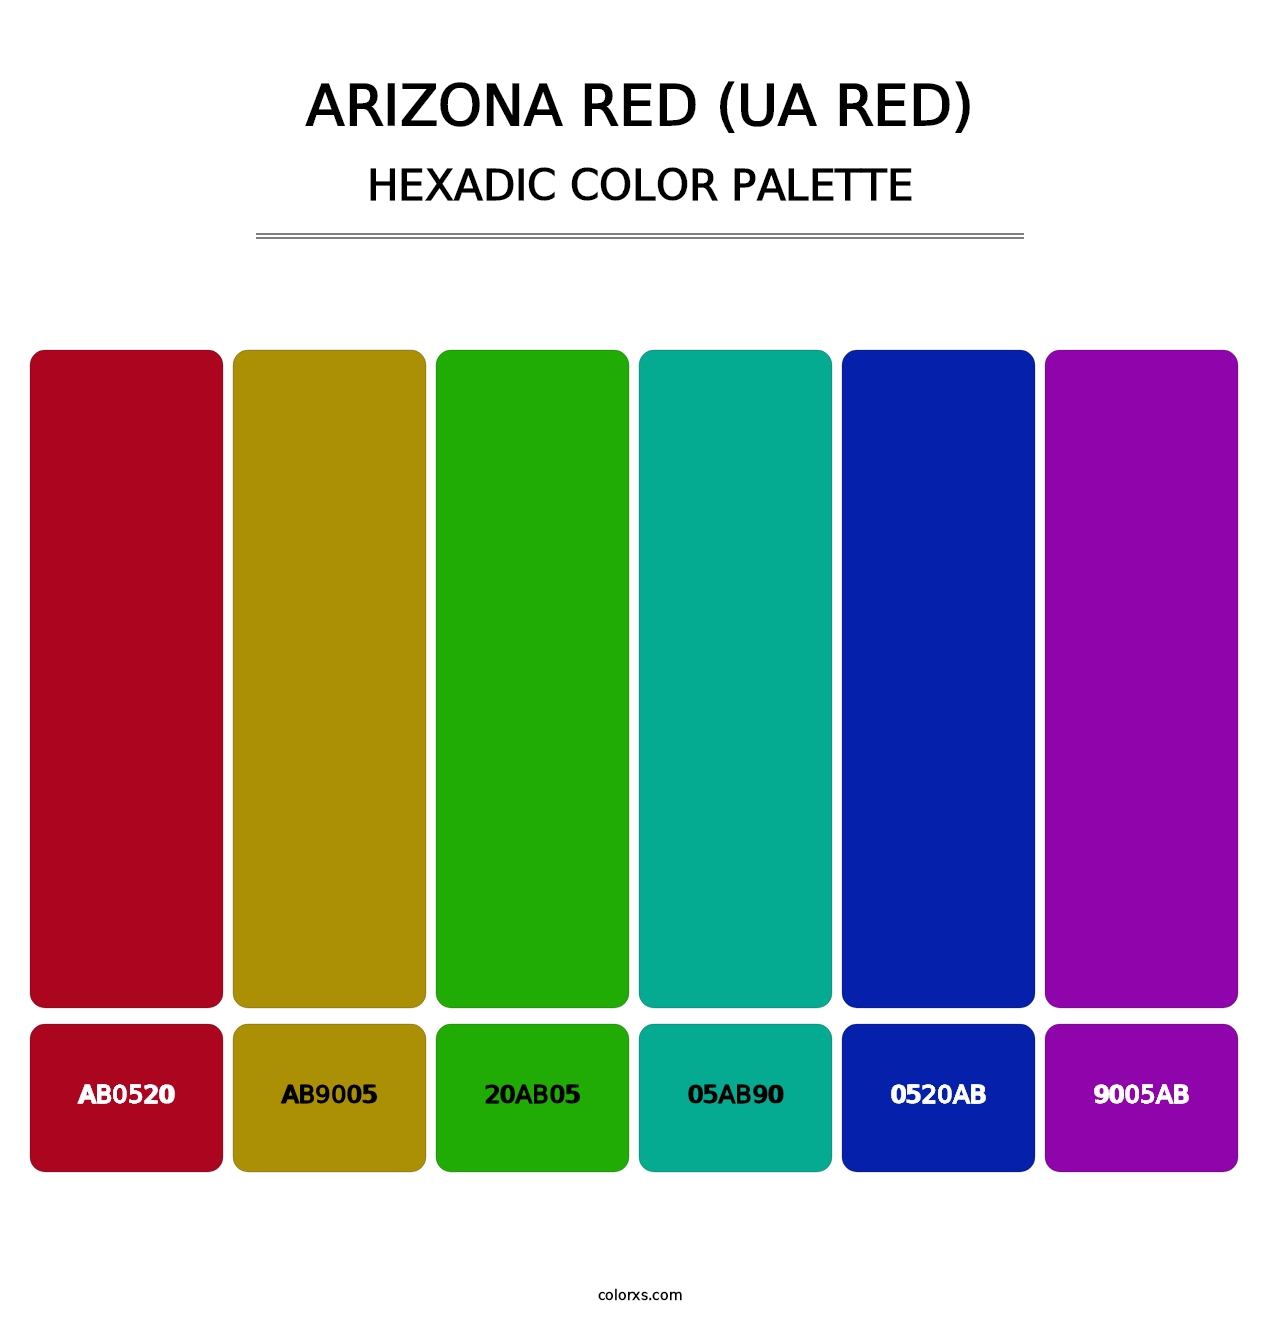 Arizona Red (UA Red) - Hexadic Color Palette